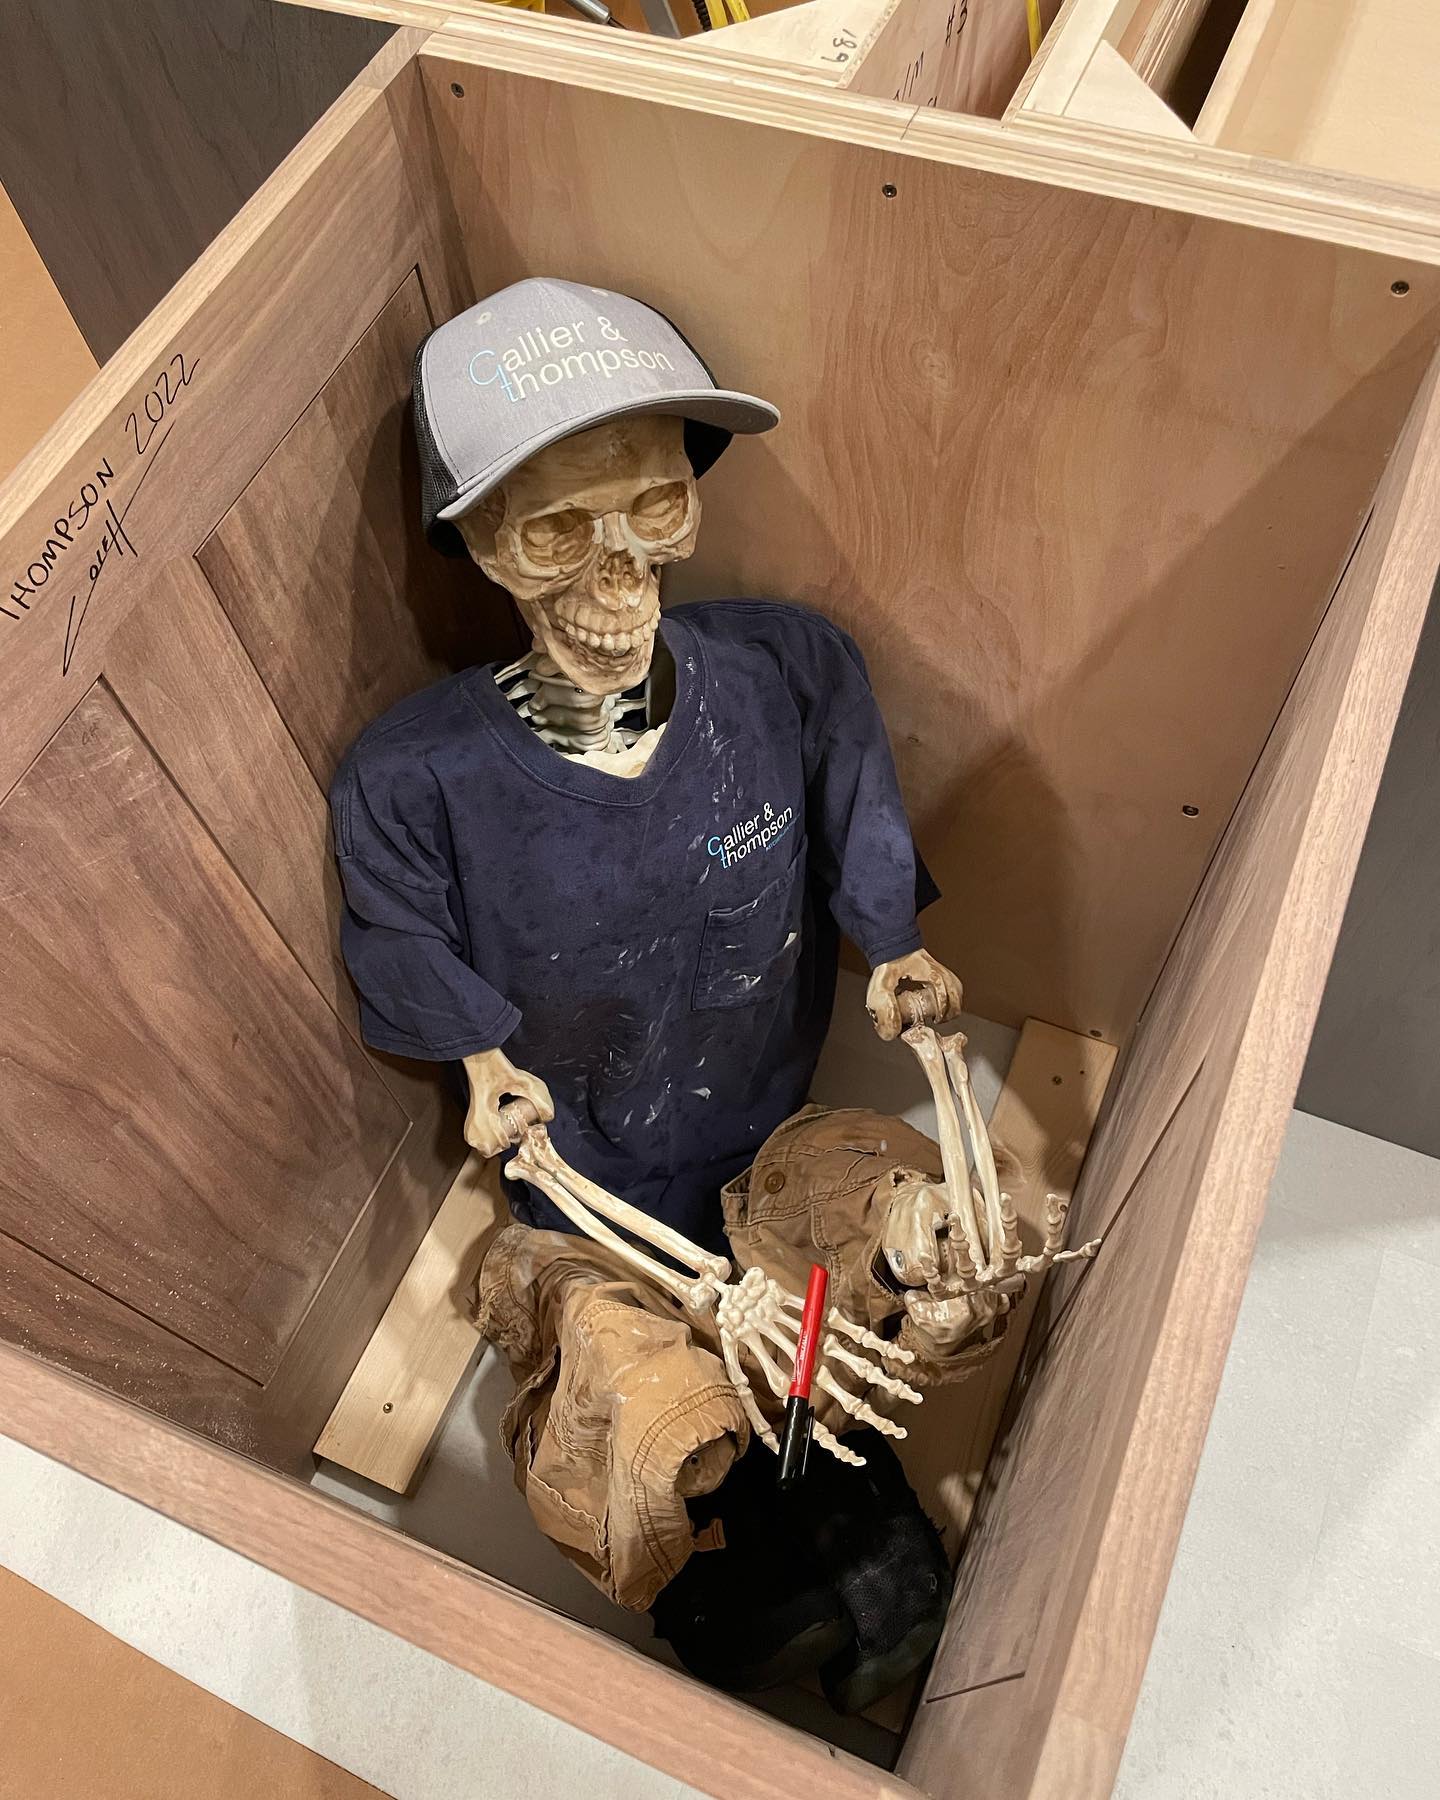 fake skeleton wearing clothes inside a kitchen cabinet